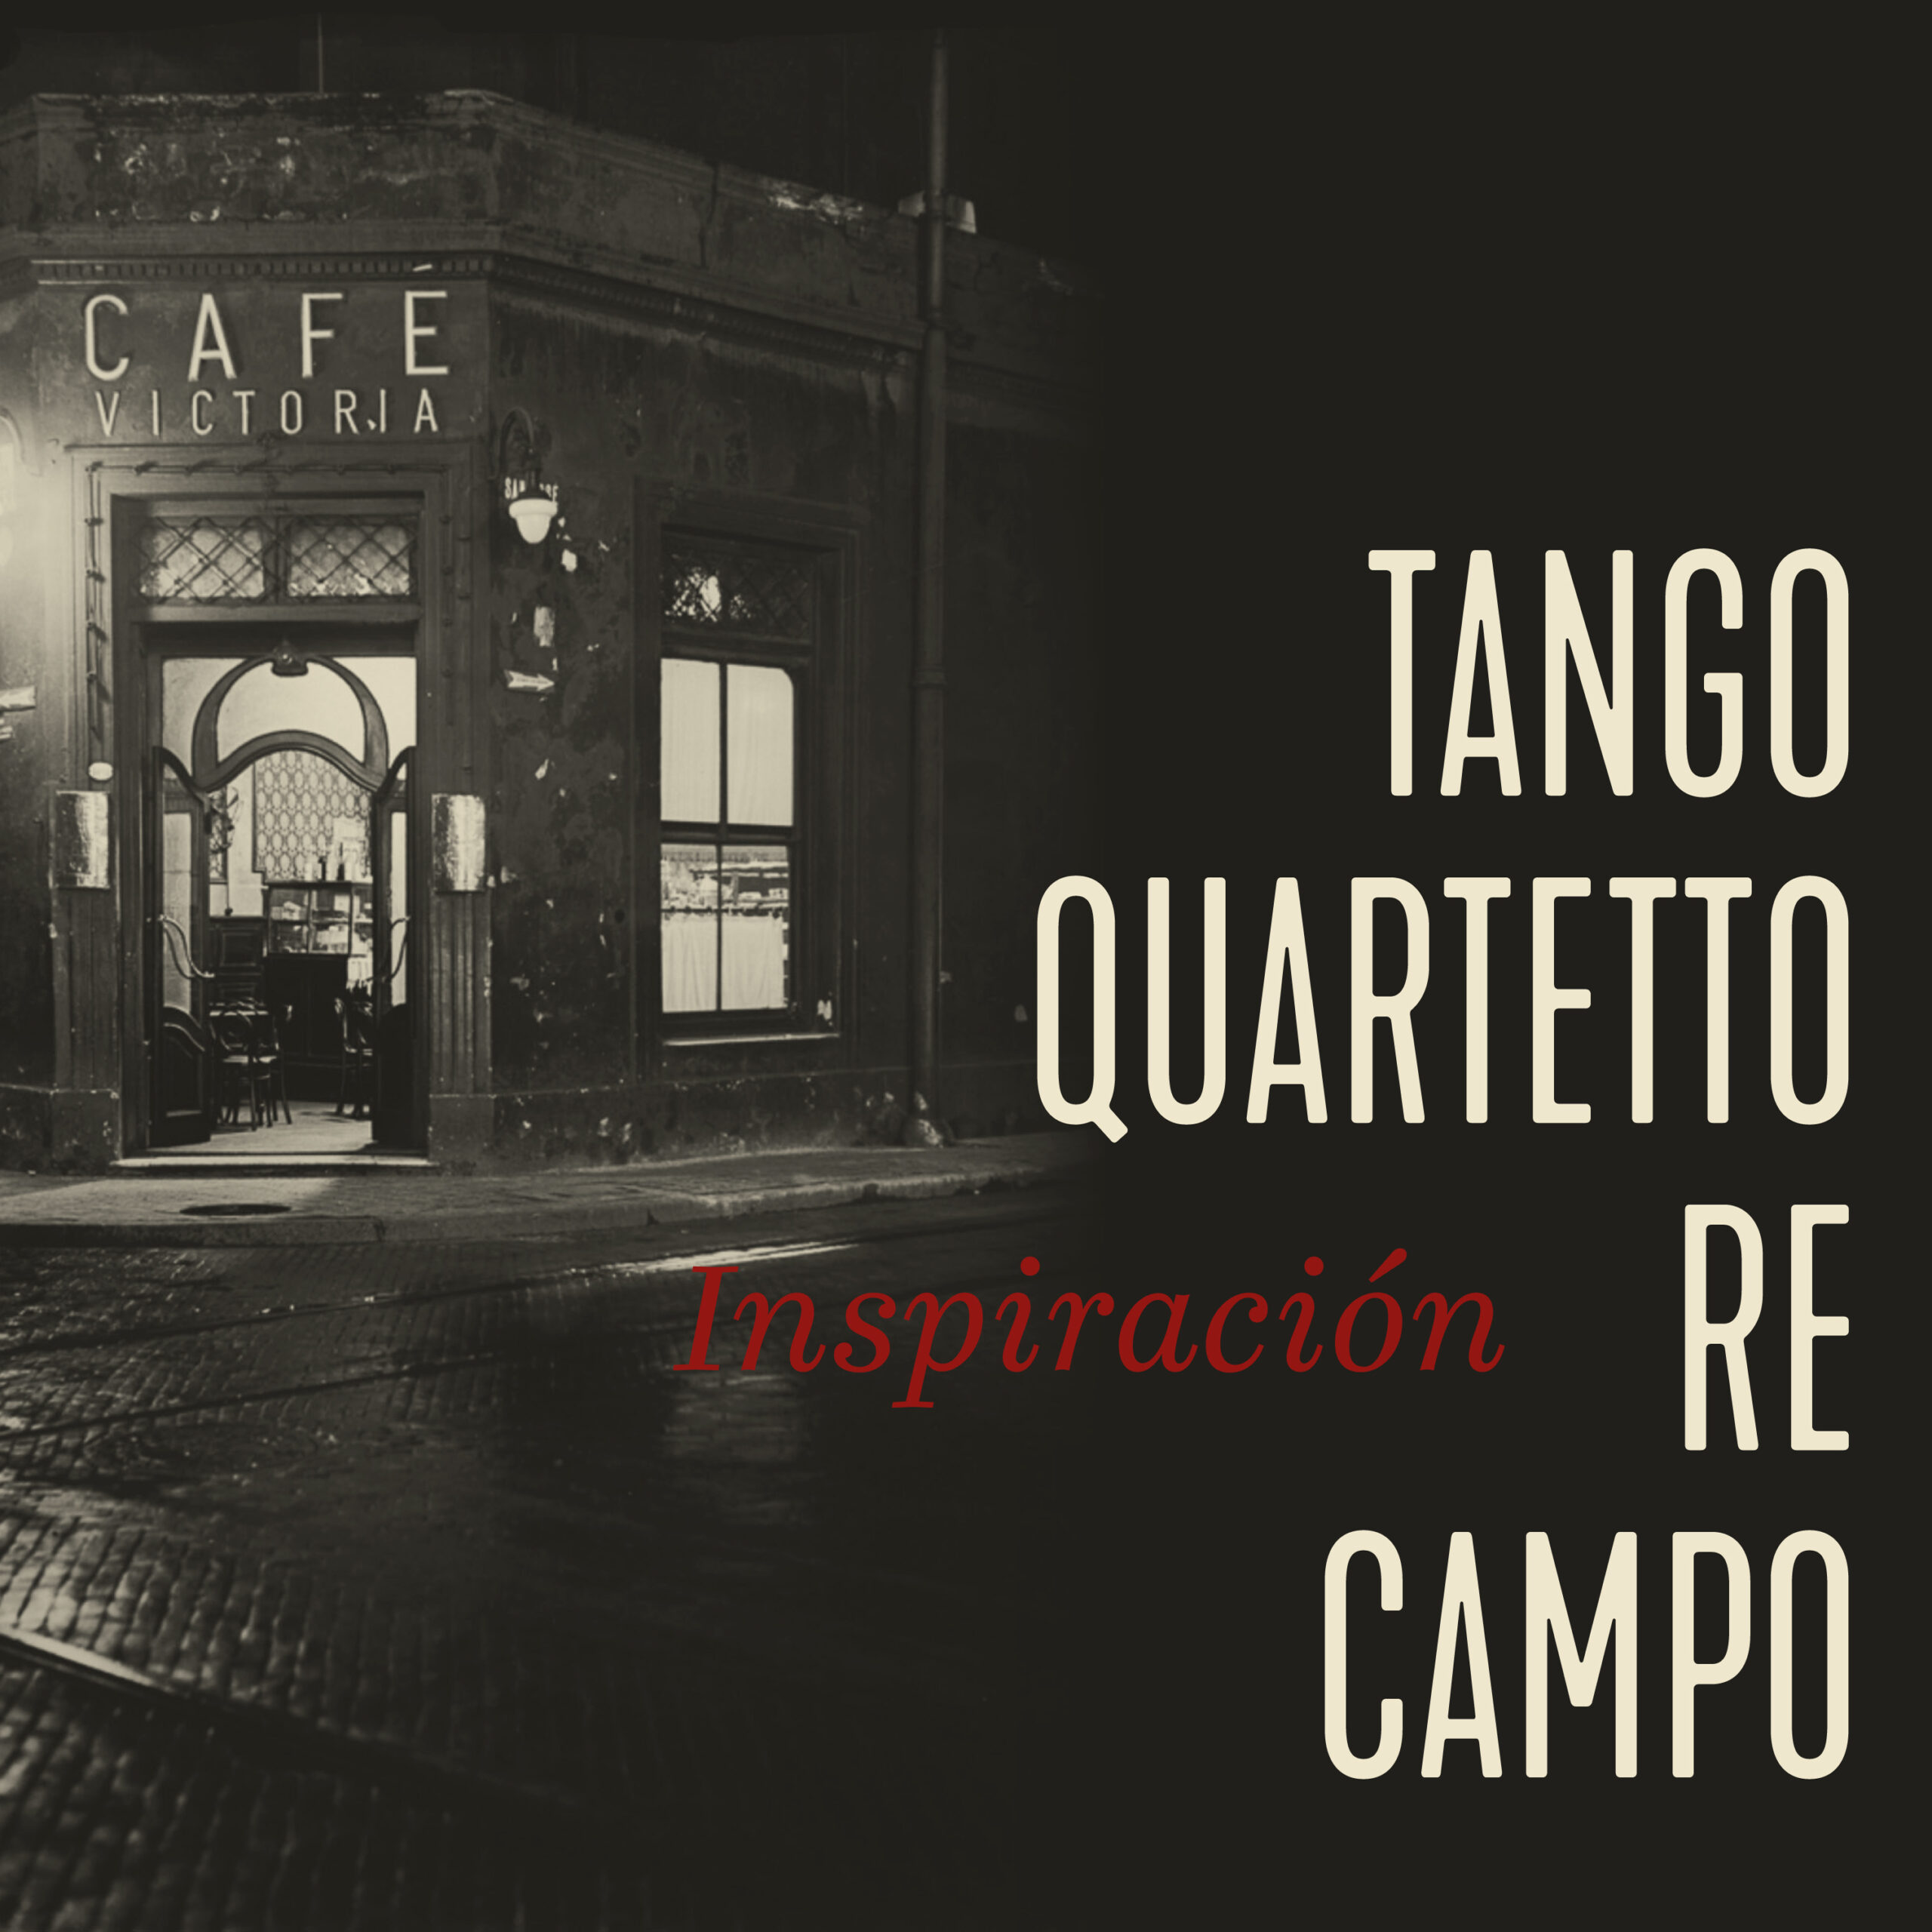 Tango Quartetto Re Campo scaled